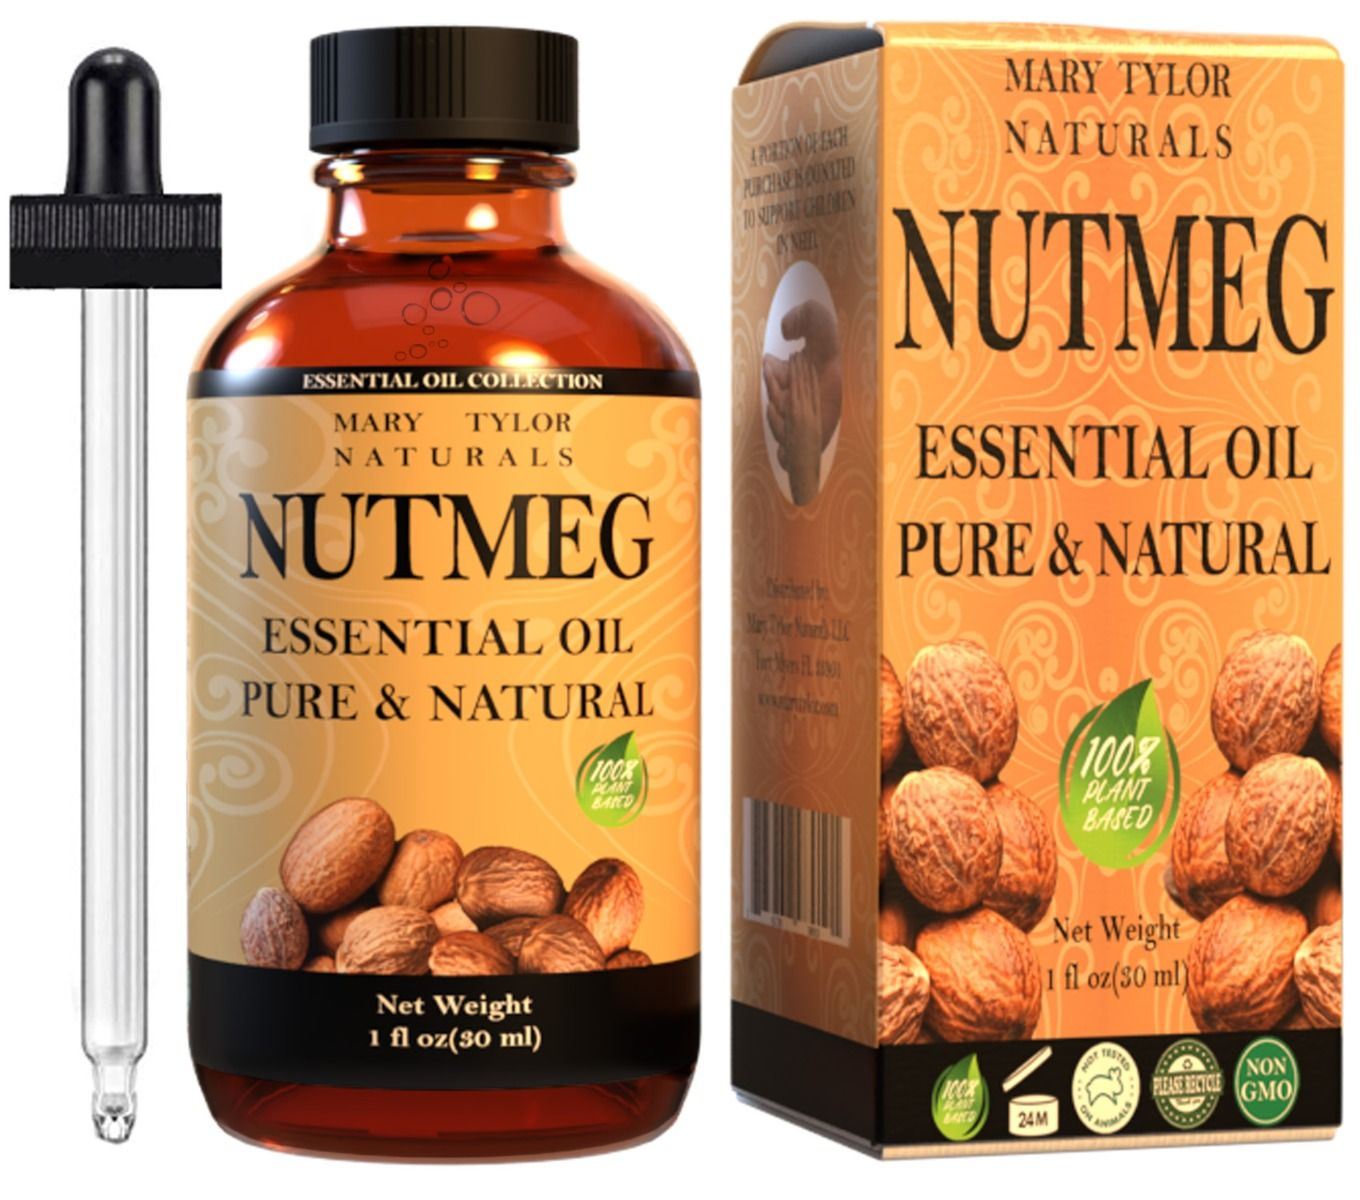 Essential Oil Nutmeg at Whole Foods Market